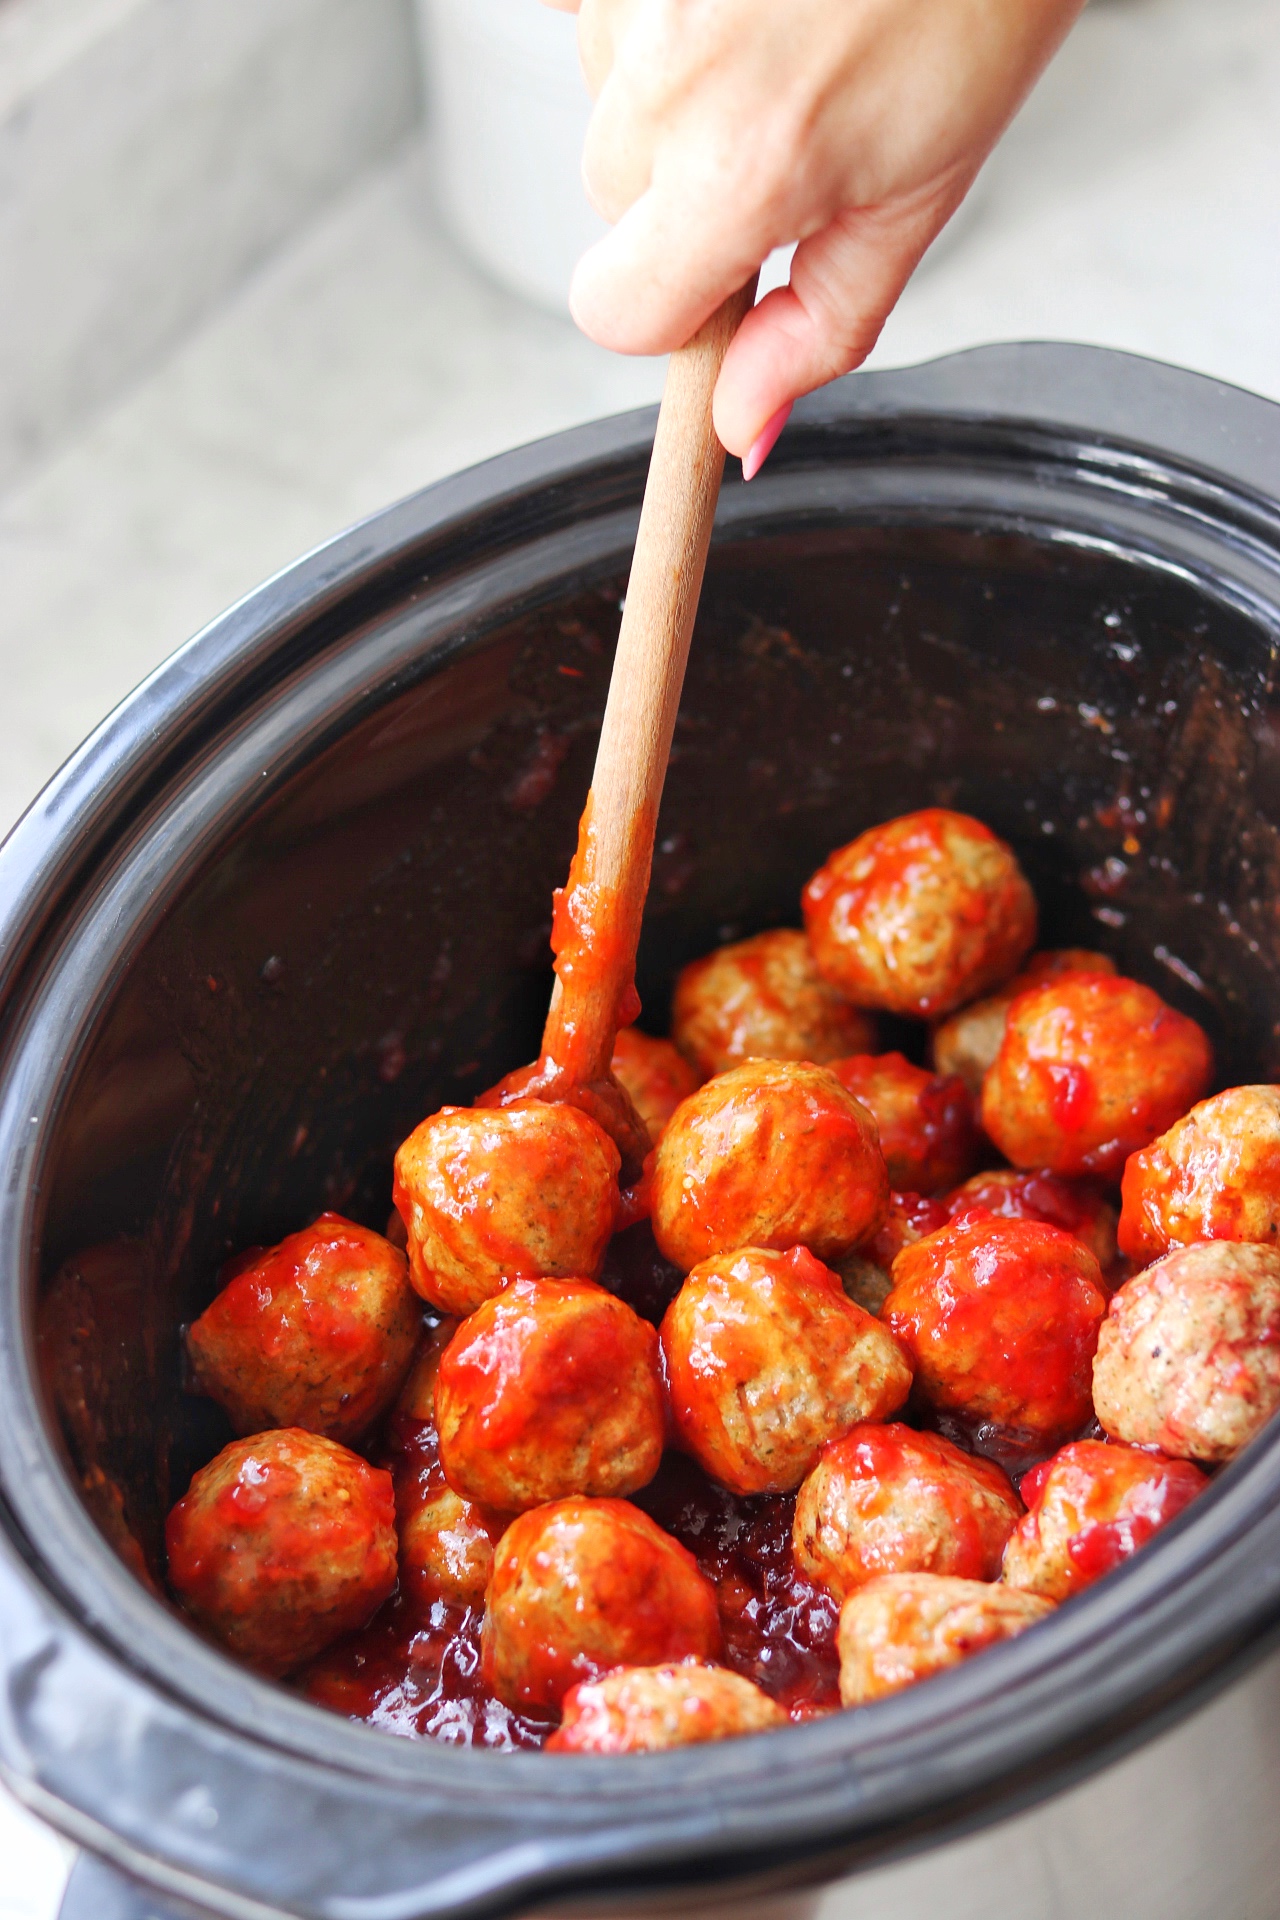 Heinz chili sauce meatballs in the crock pot or slow cooker